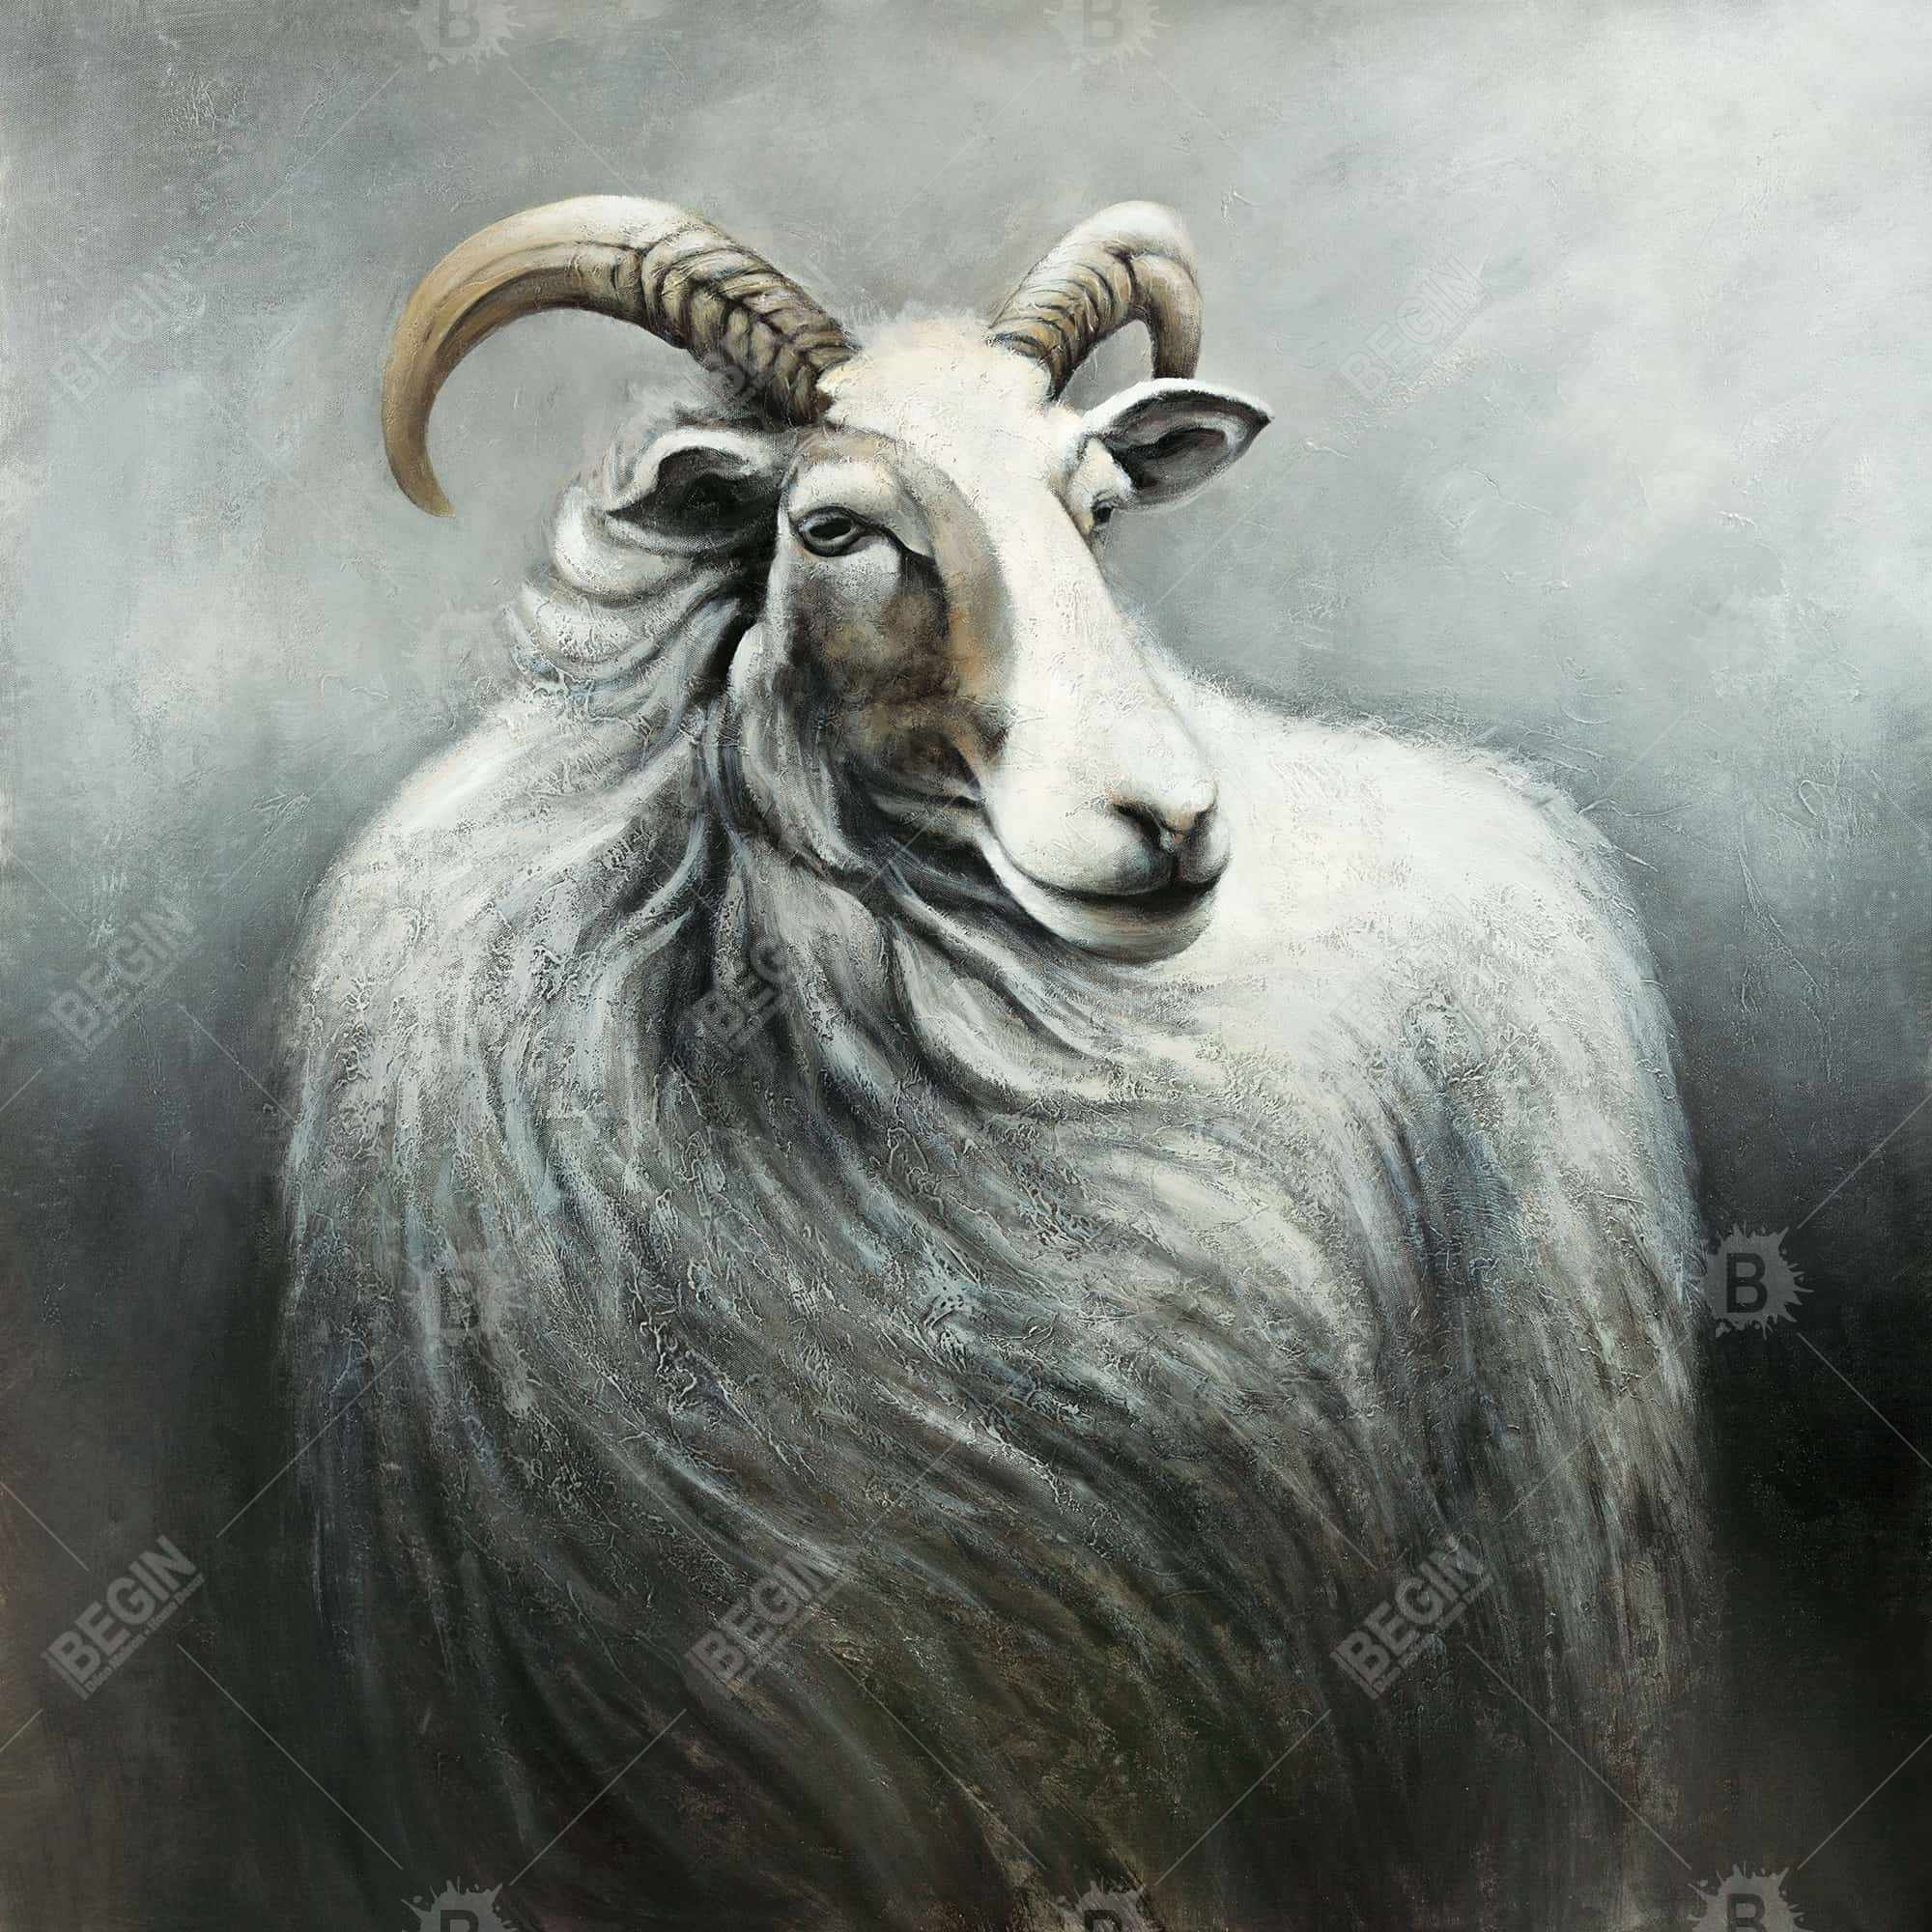 Cashmere goat